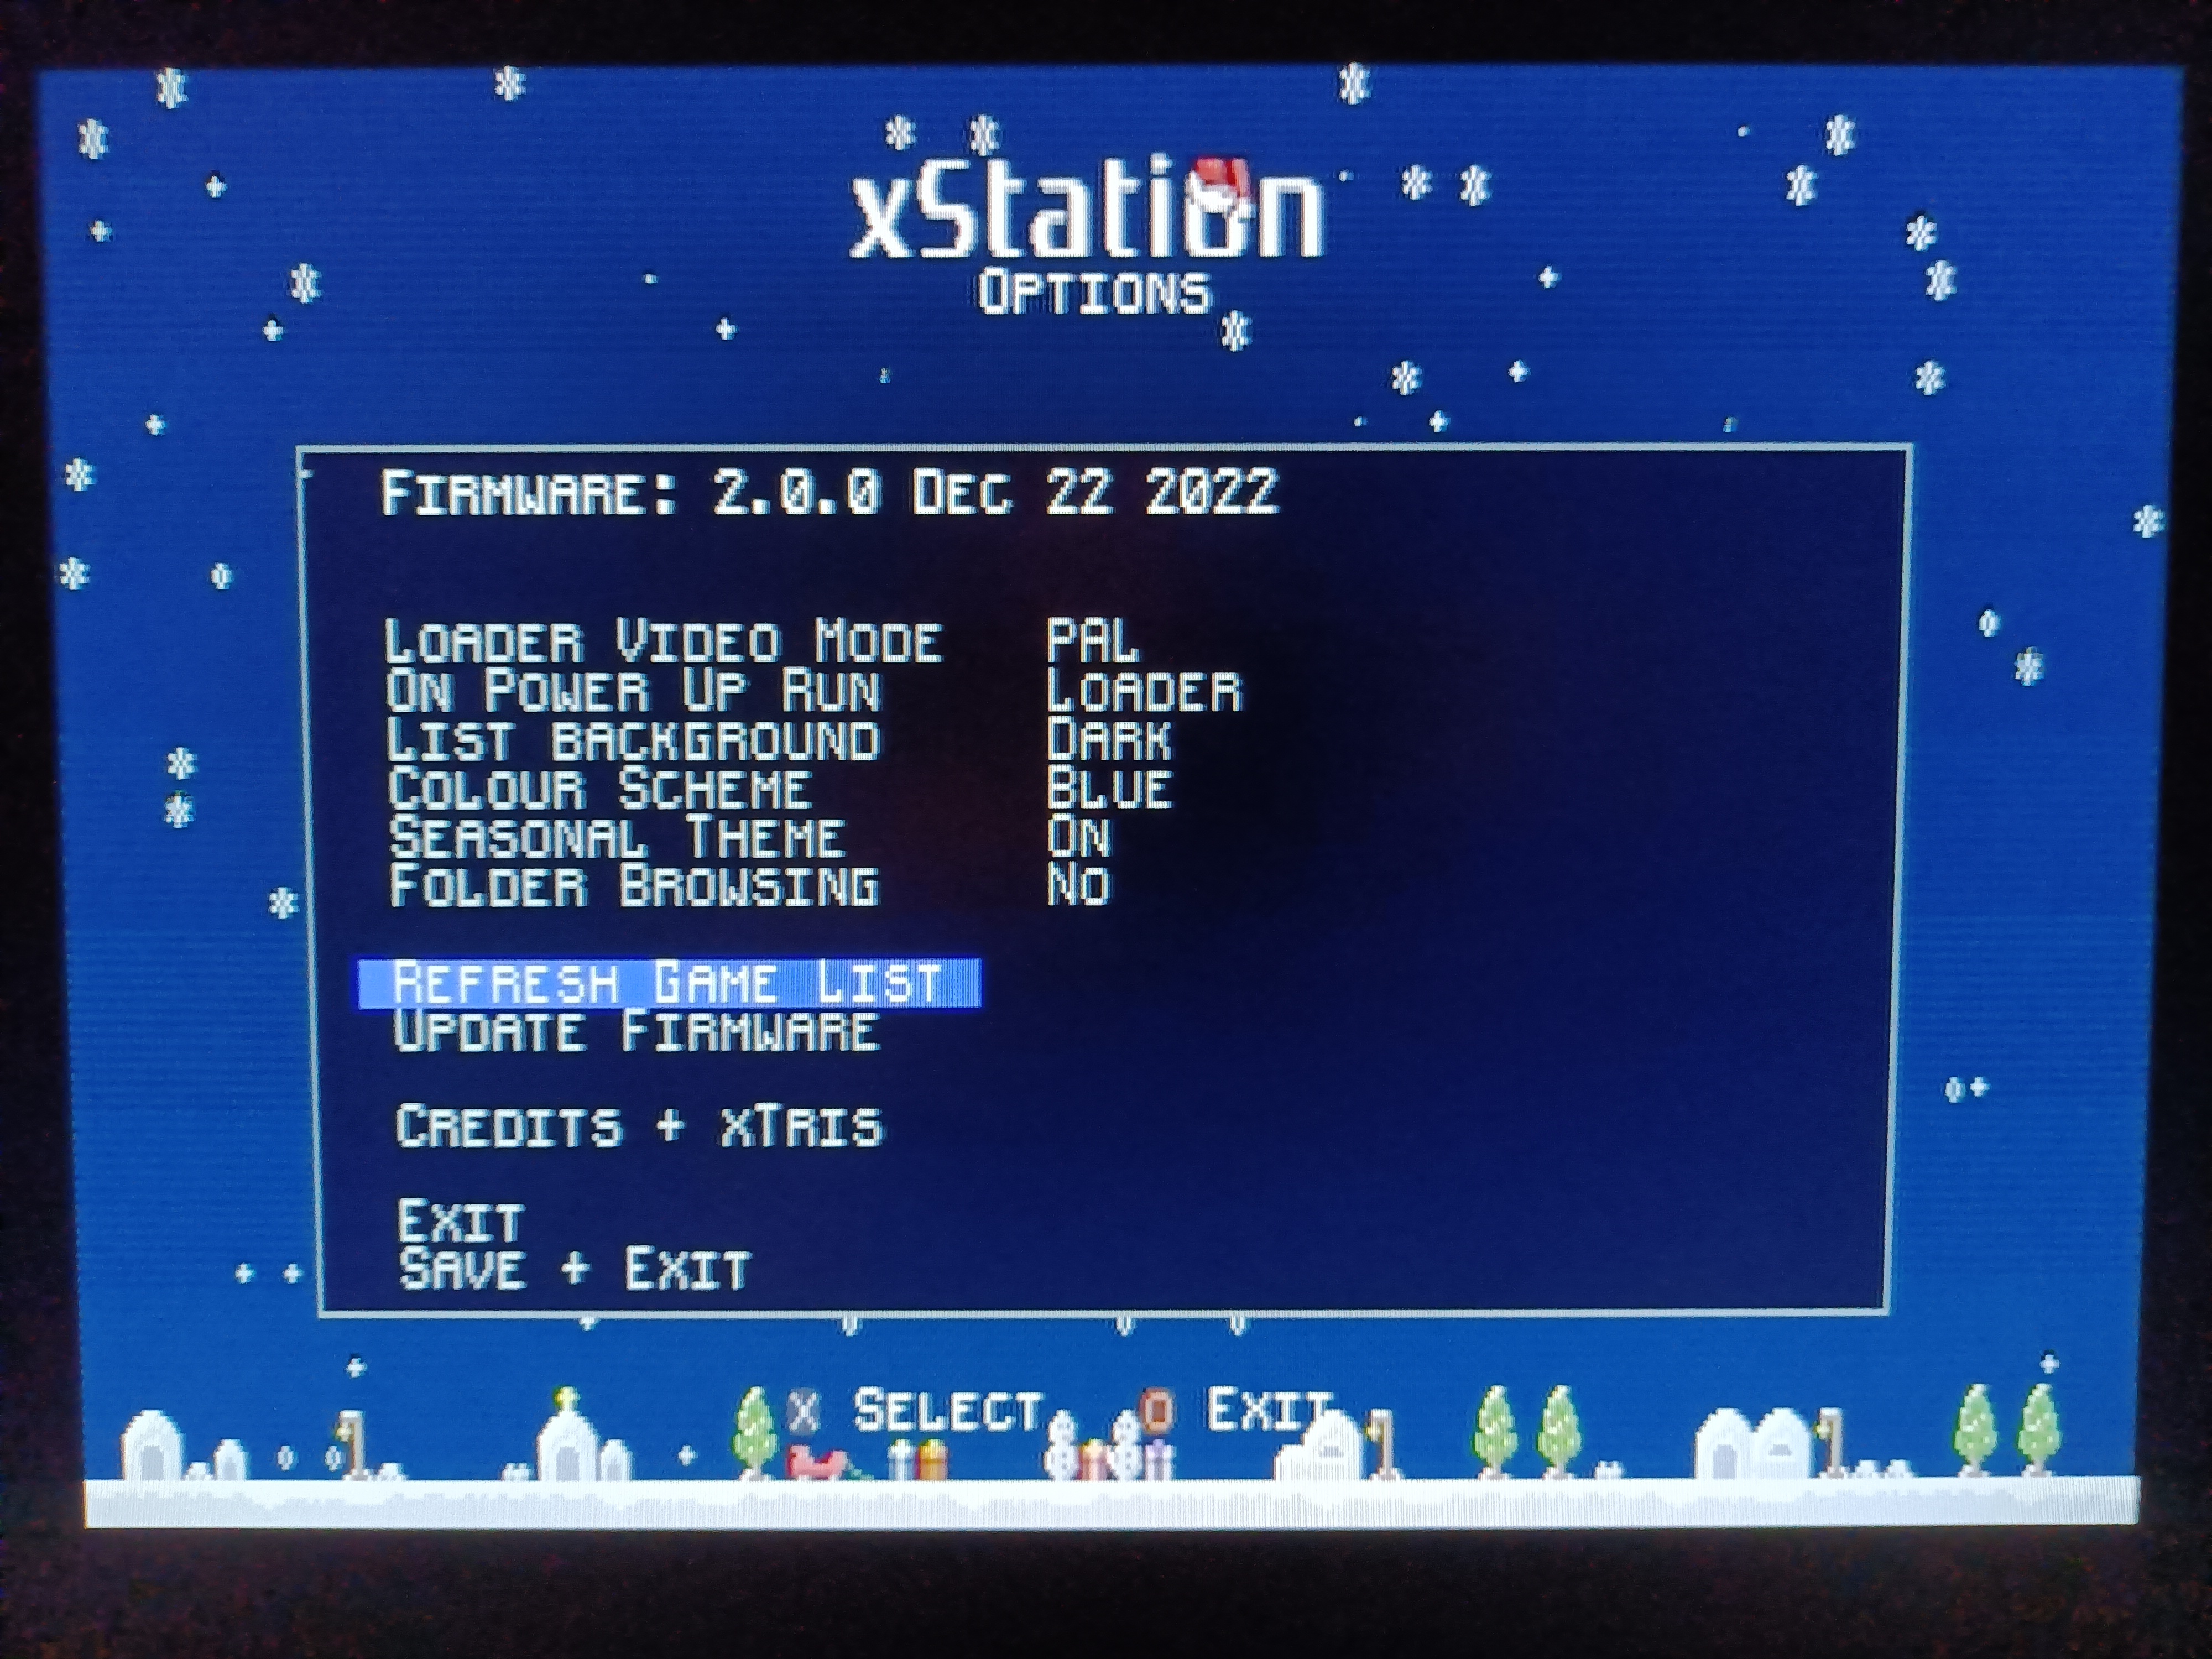 xStation options screen